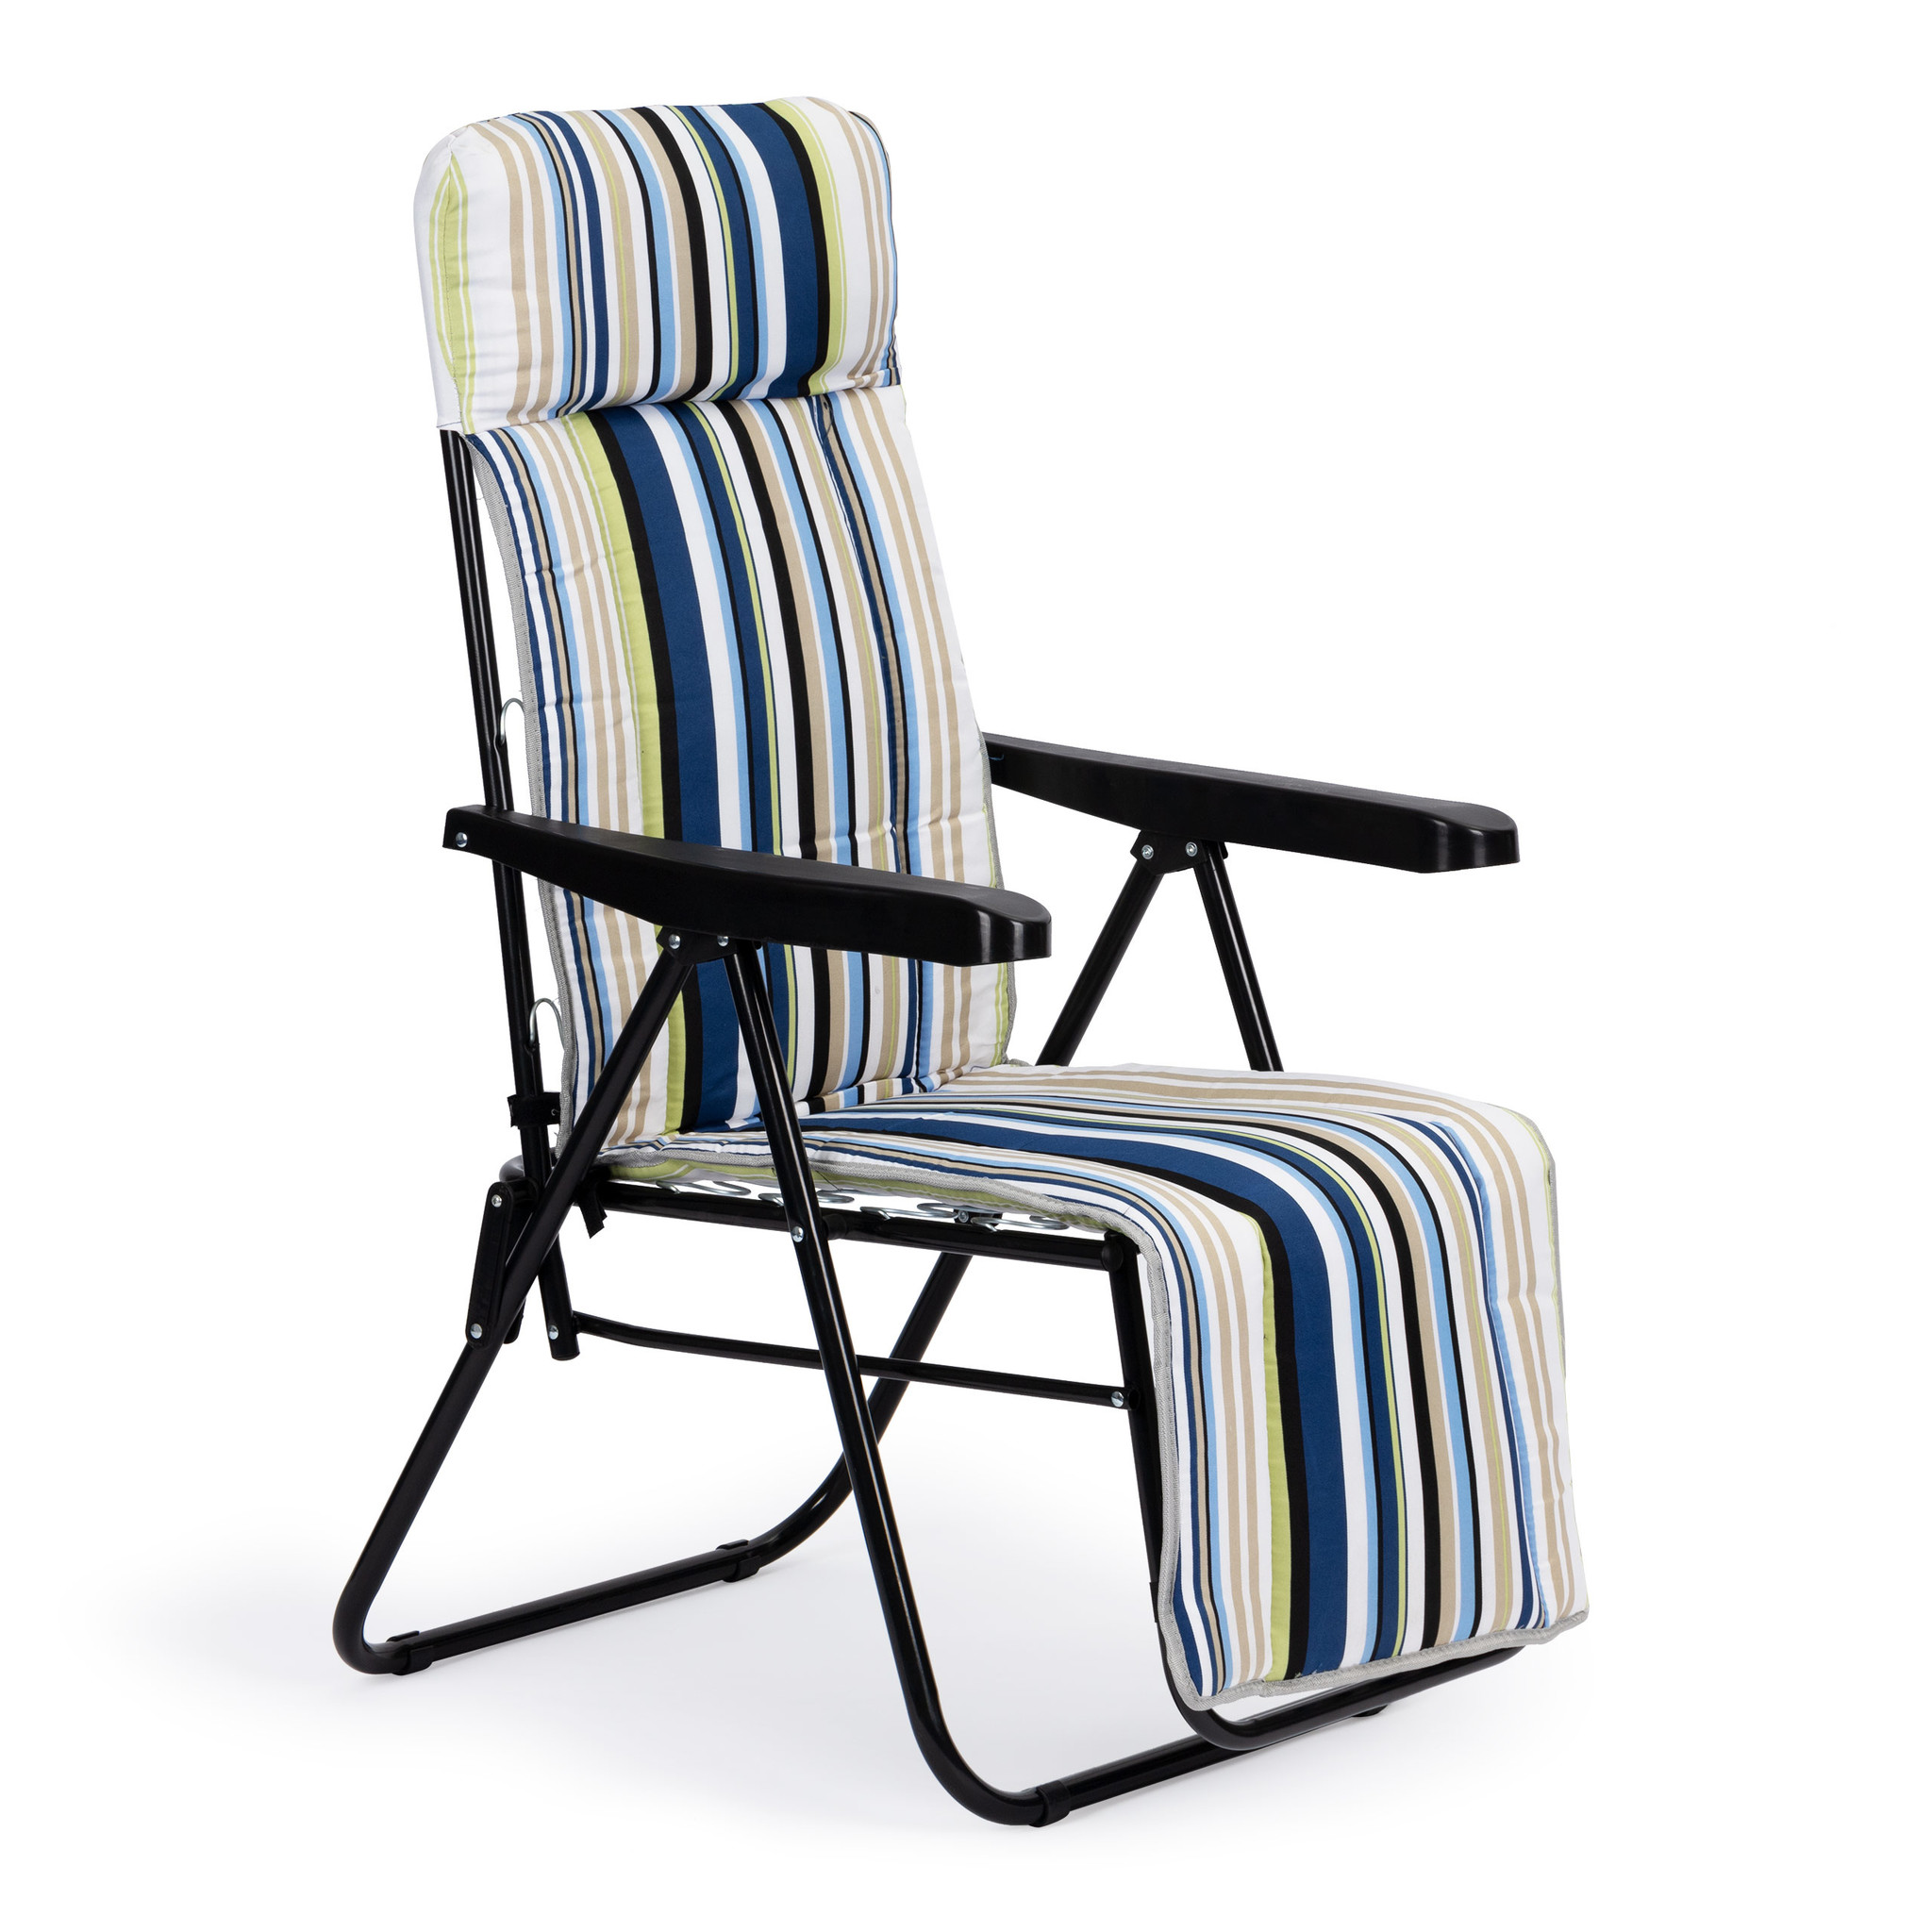 Vergoeding Celsius Fantastisch Viking Choice Tuin ligstoel strandstoel verstelbaar – Met gestreept kussen  - VC-Lifestyle